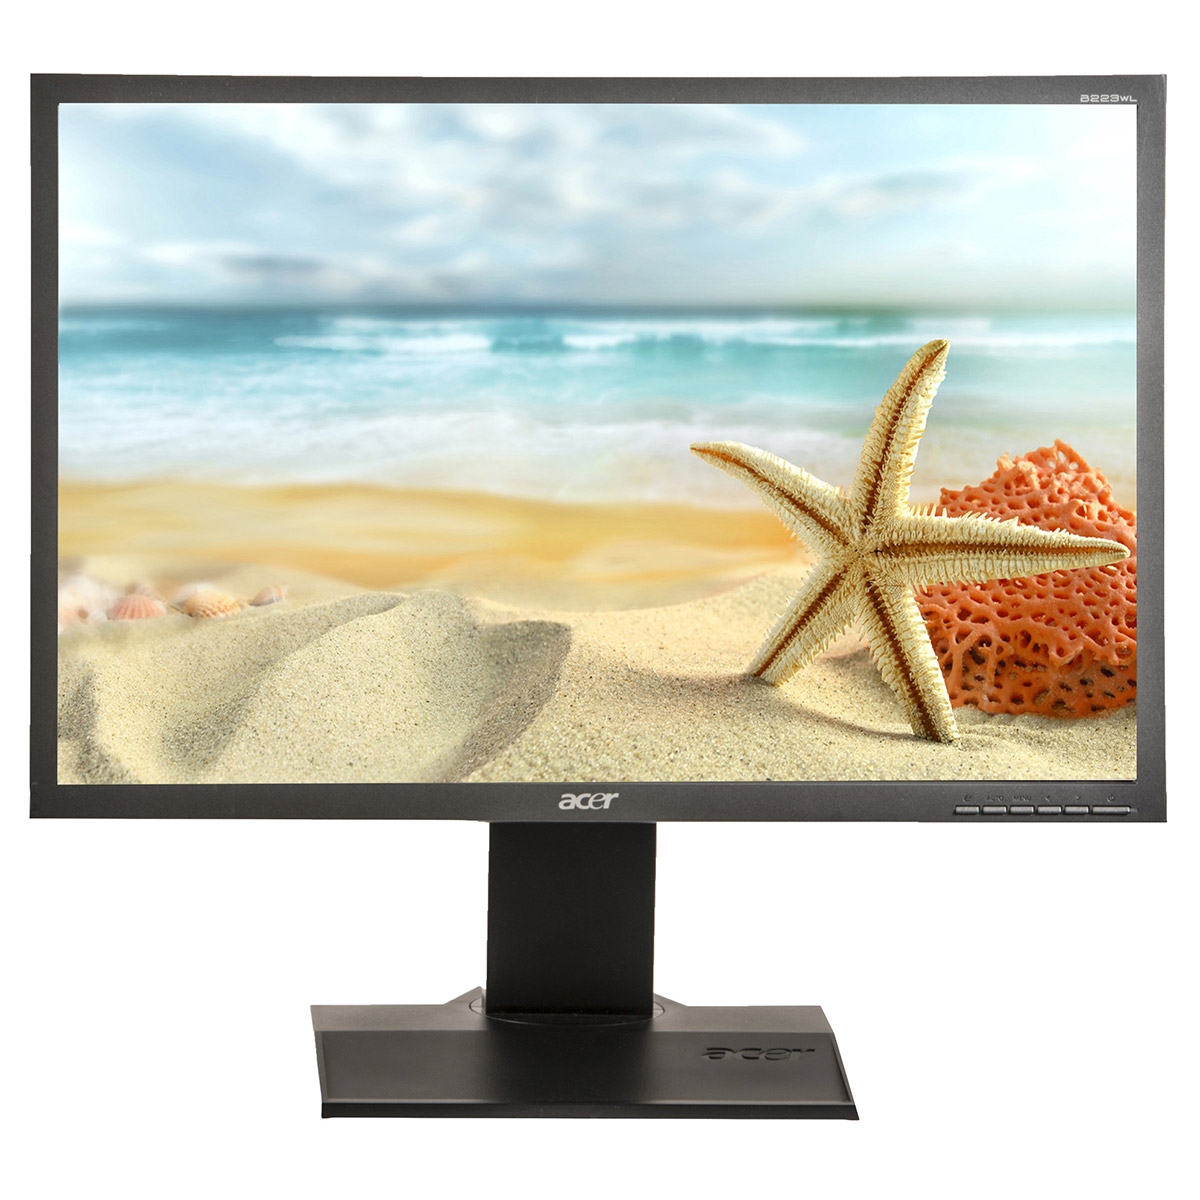 Acer B223W  22 inch LCD  1680 x 1050  16:10  negru - argintiu  monitor refurbished